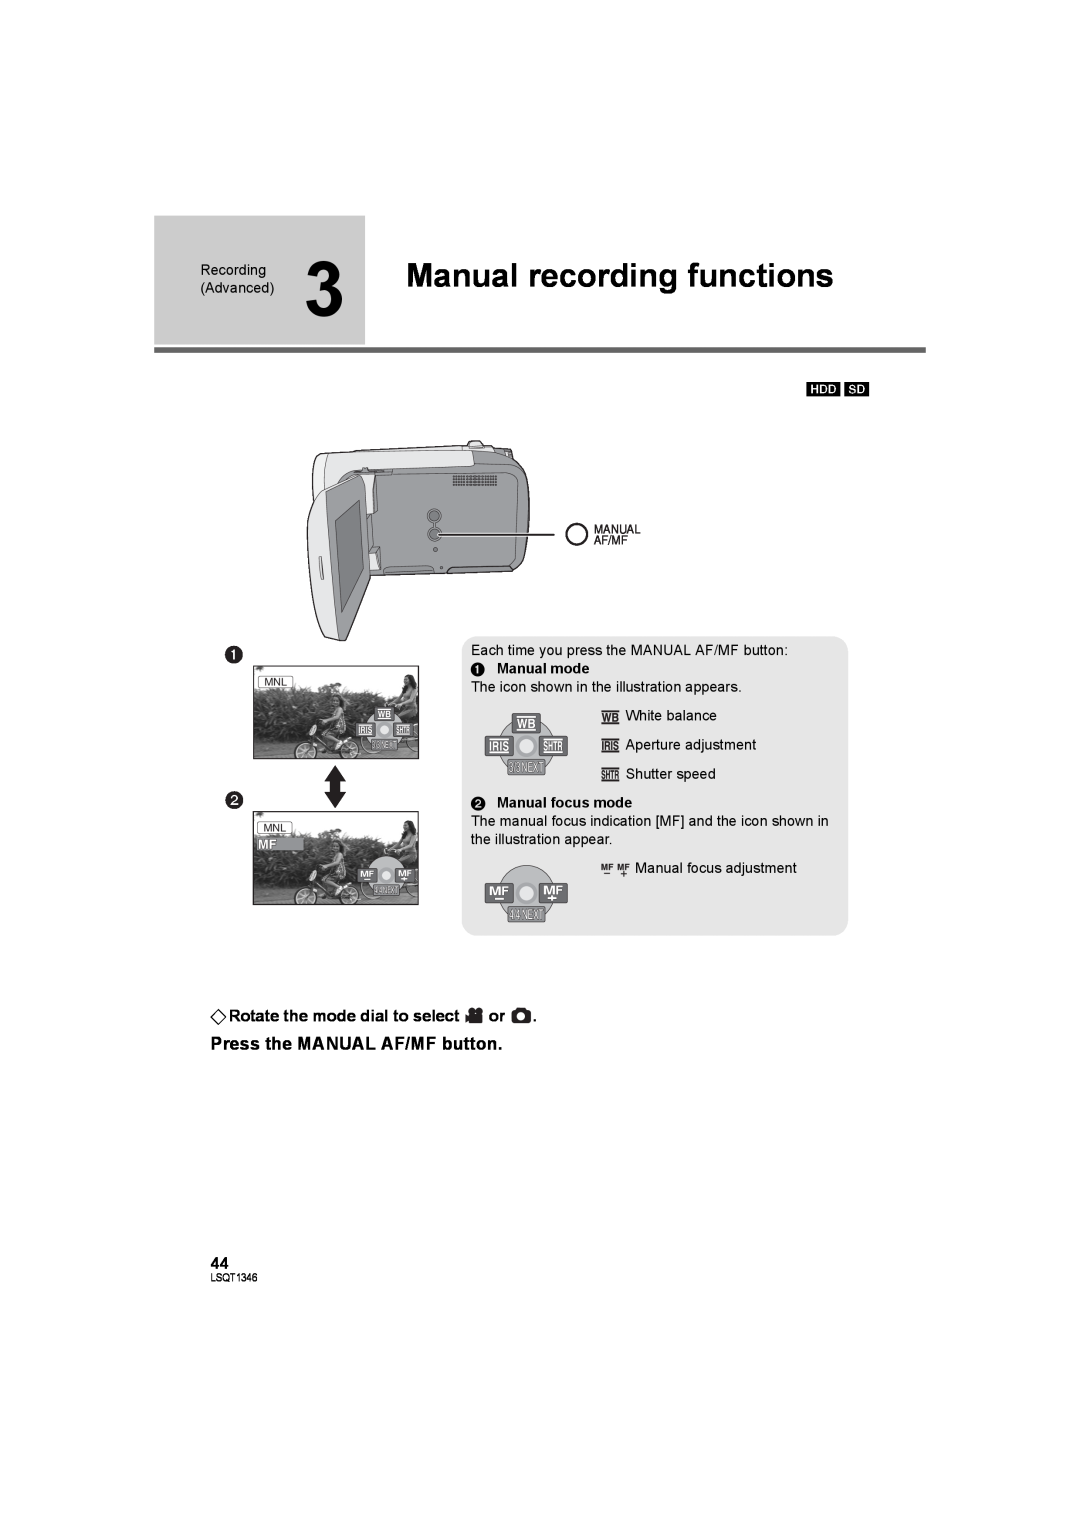 Panasonic SDR-H50 Manual recording functions, Press the MANUAL AF/MF button, Manual mode, Manual focus mode 